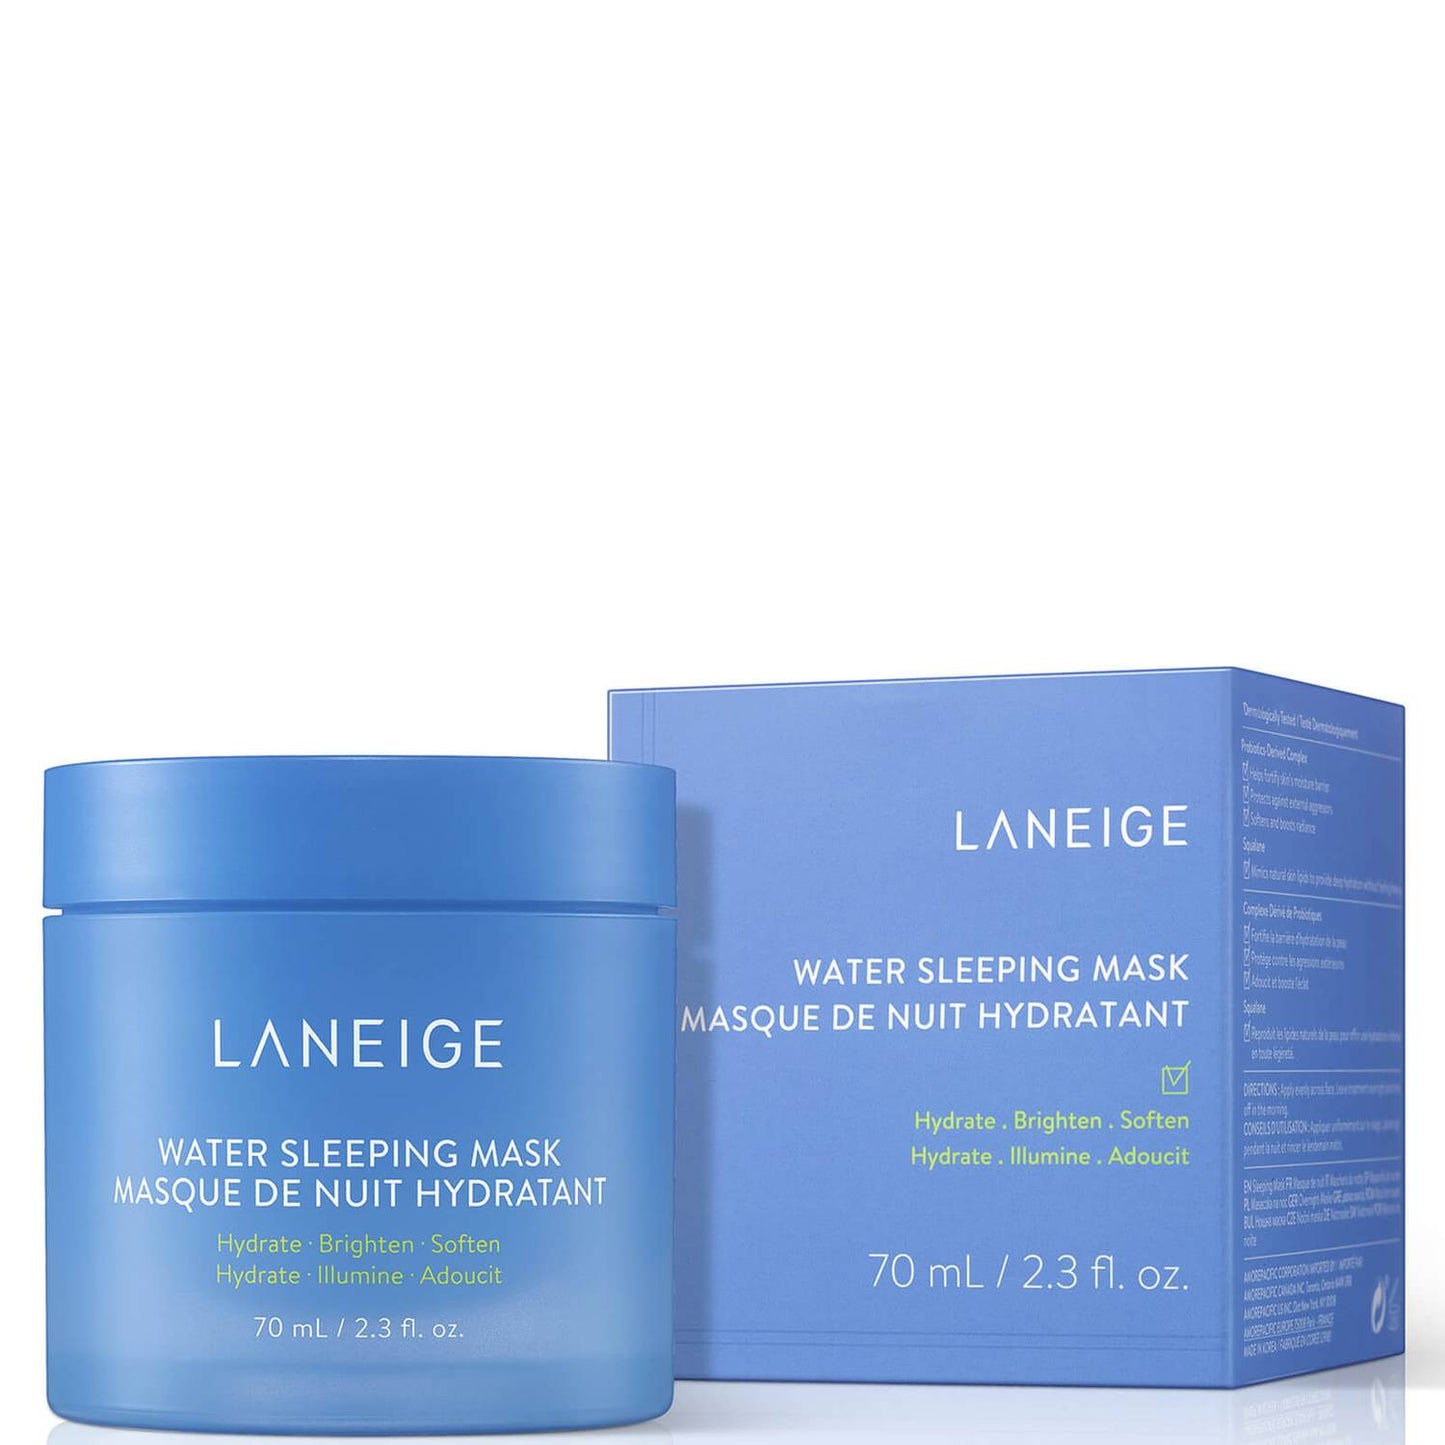 Laneige Cosmetic Water Sleeping Mask 70g All Night Hydrating Repair Purifies Skin Face Mask